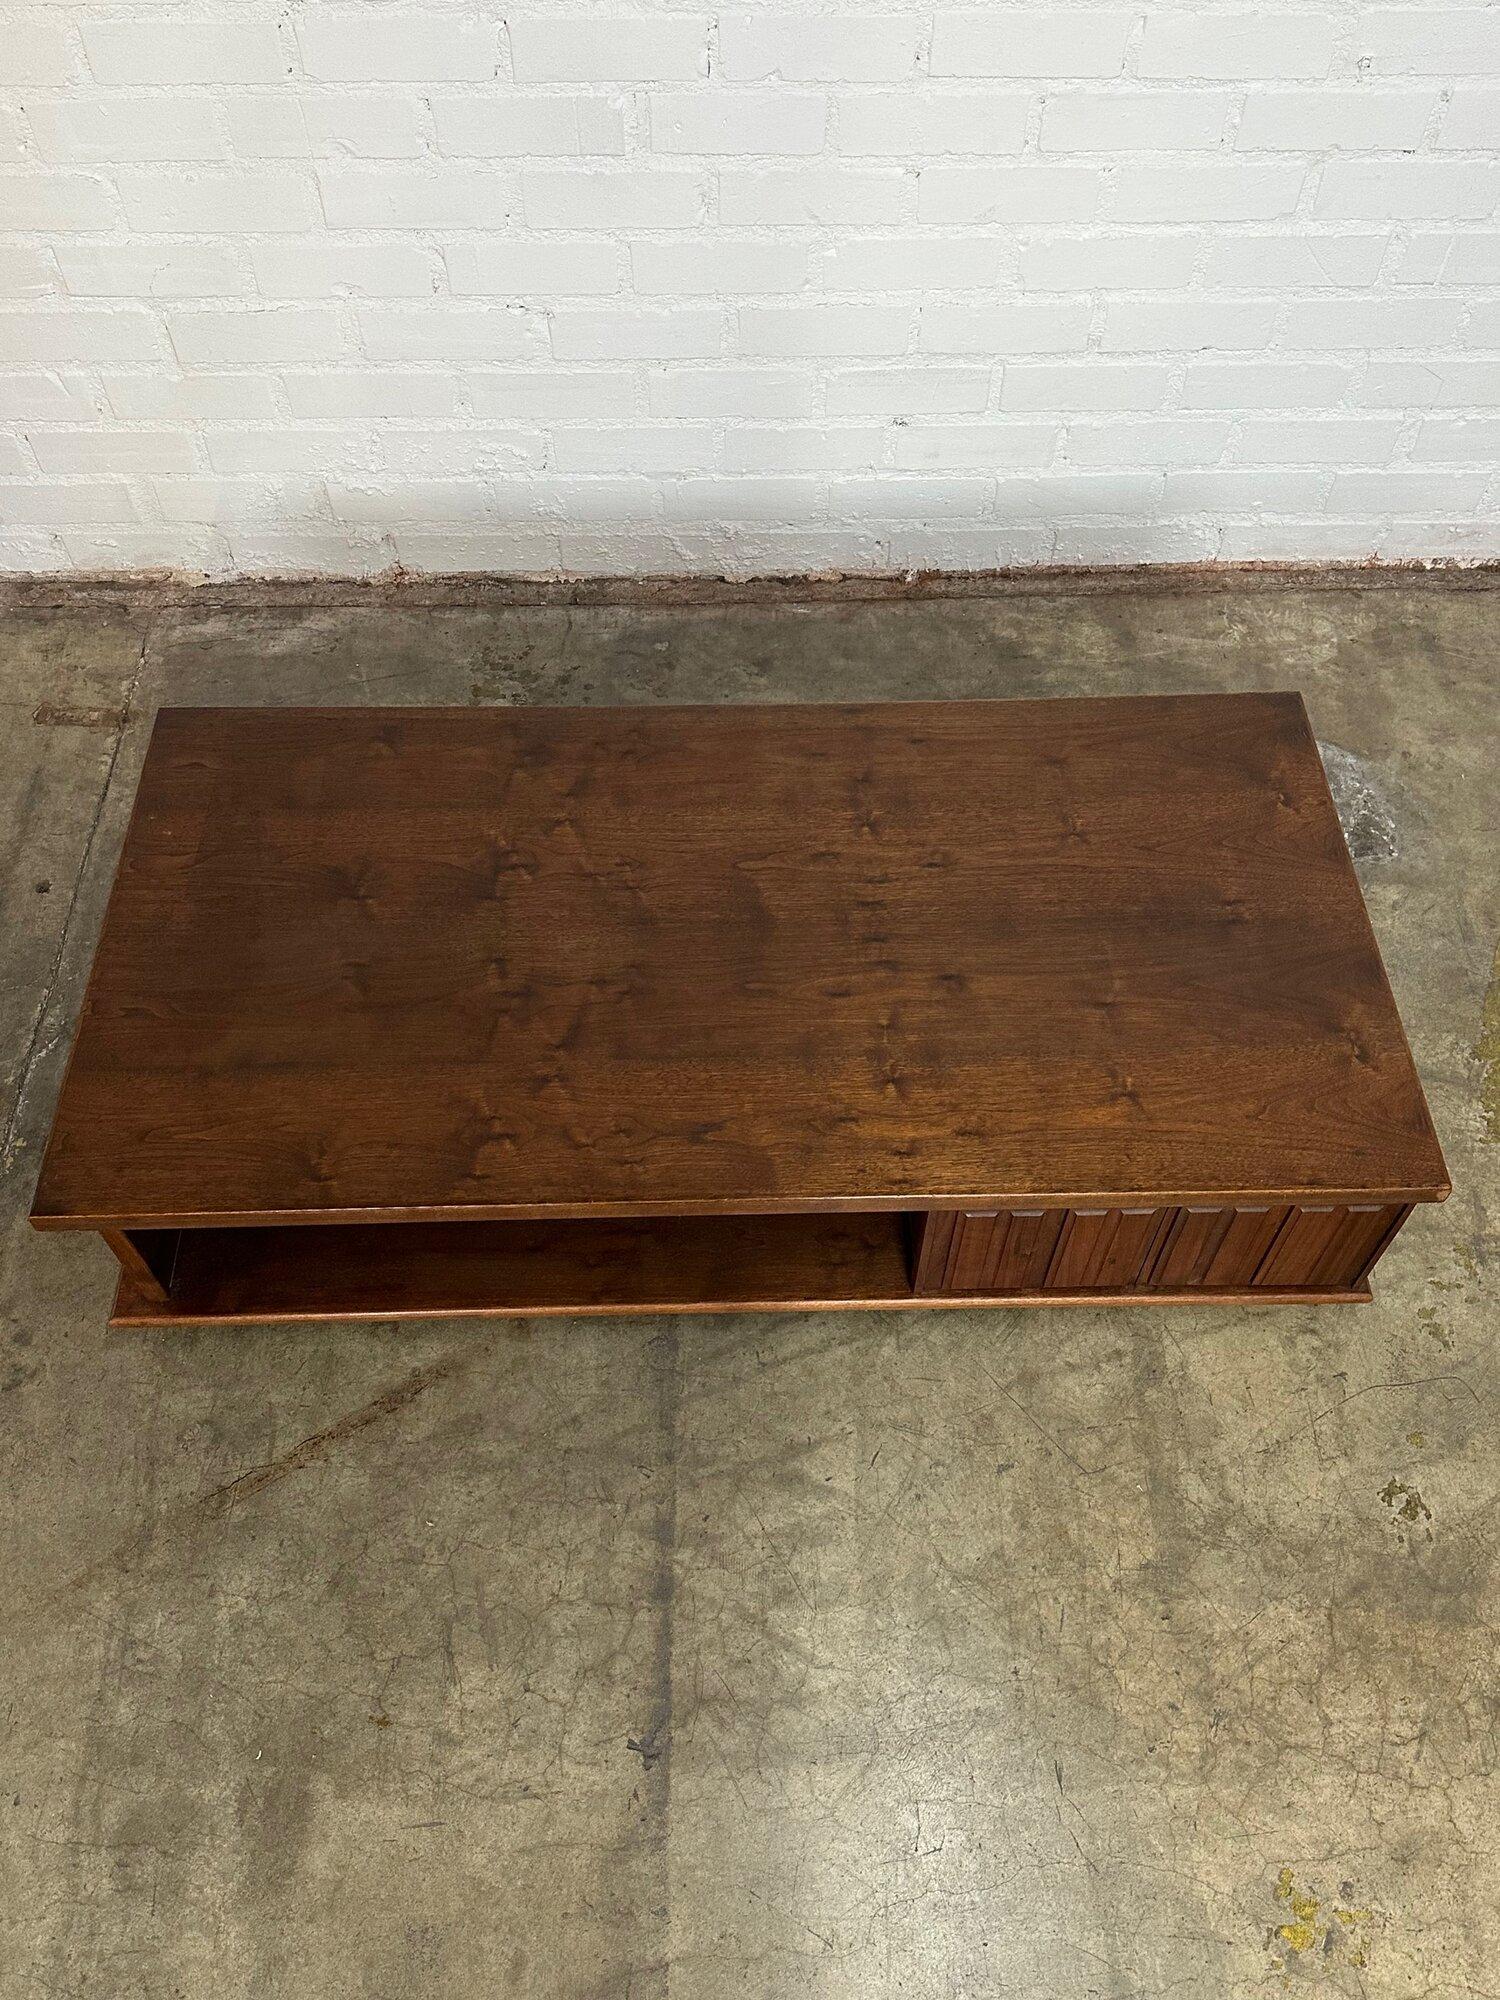 low rectangular coffee table